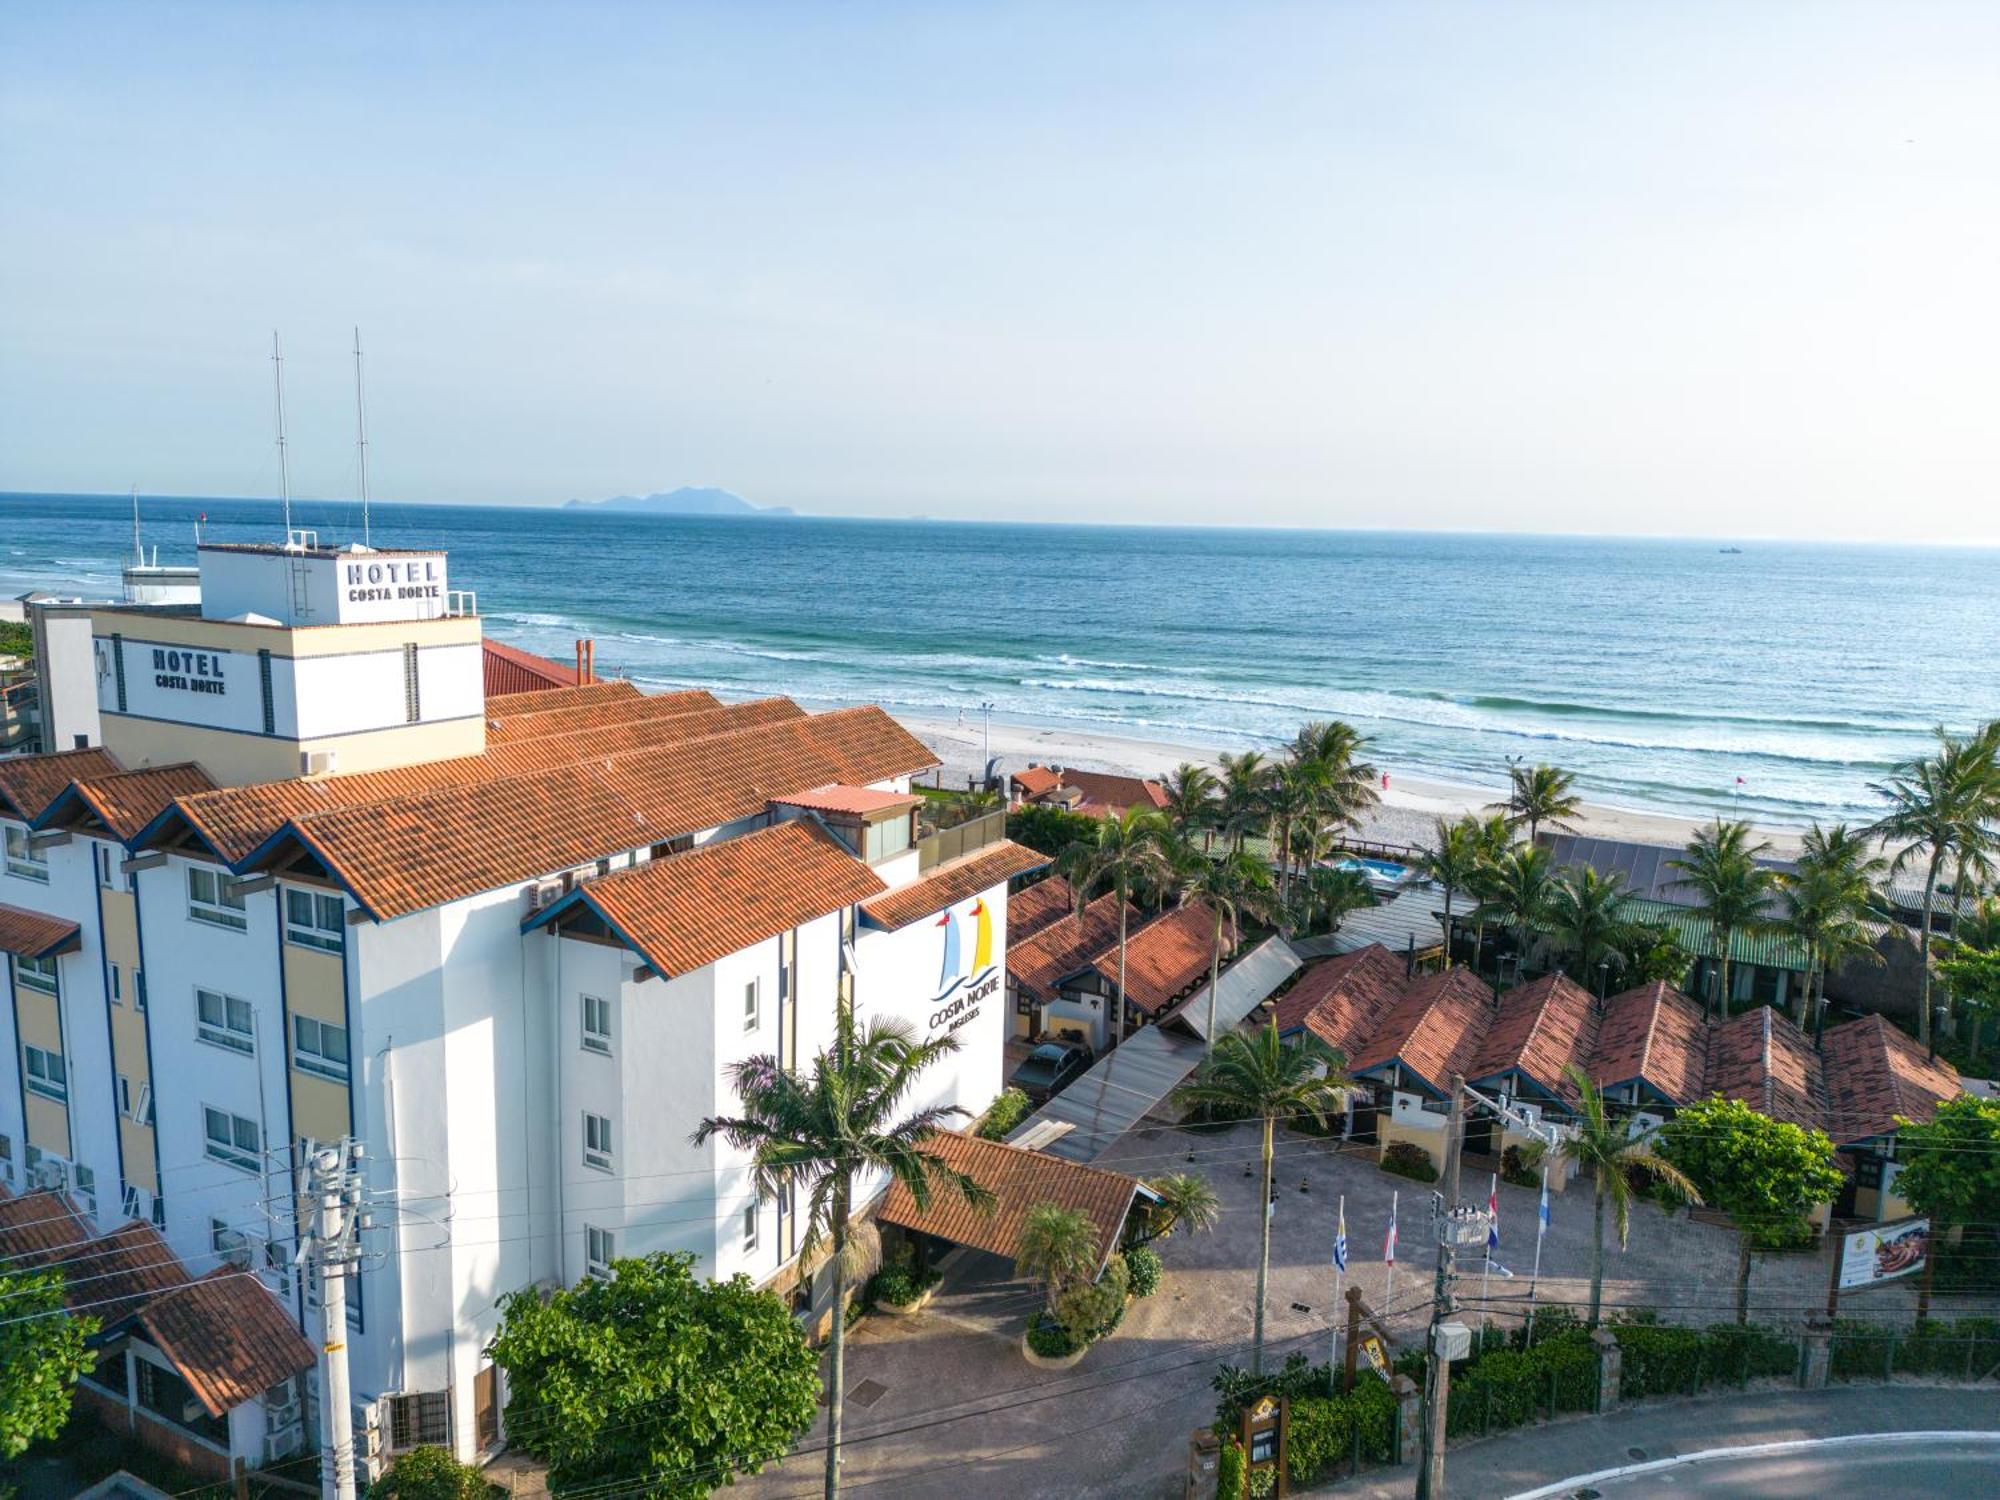 Costa Norte Ingleses Hotel Florianopolis Exterior photo